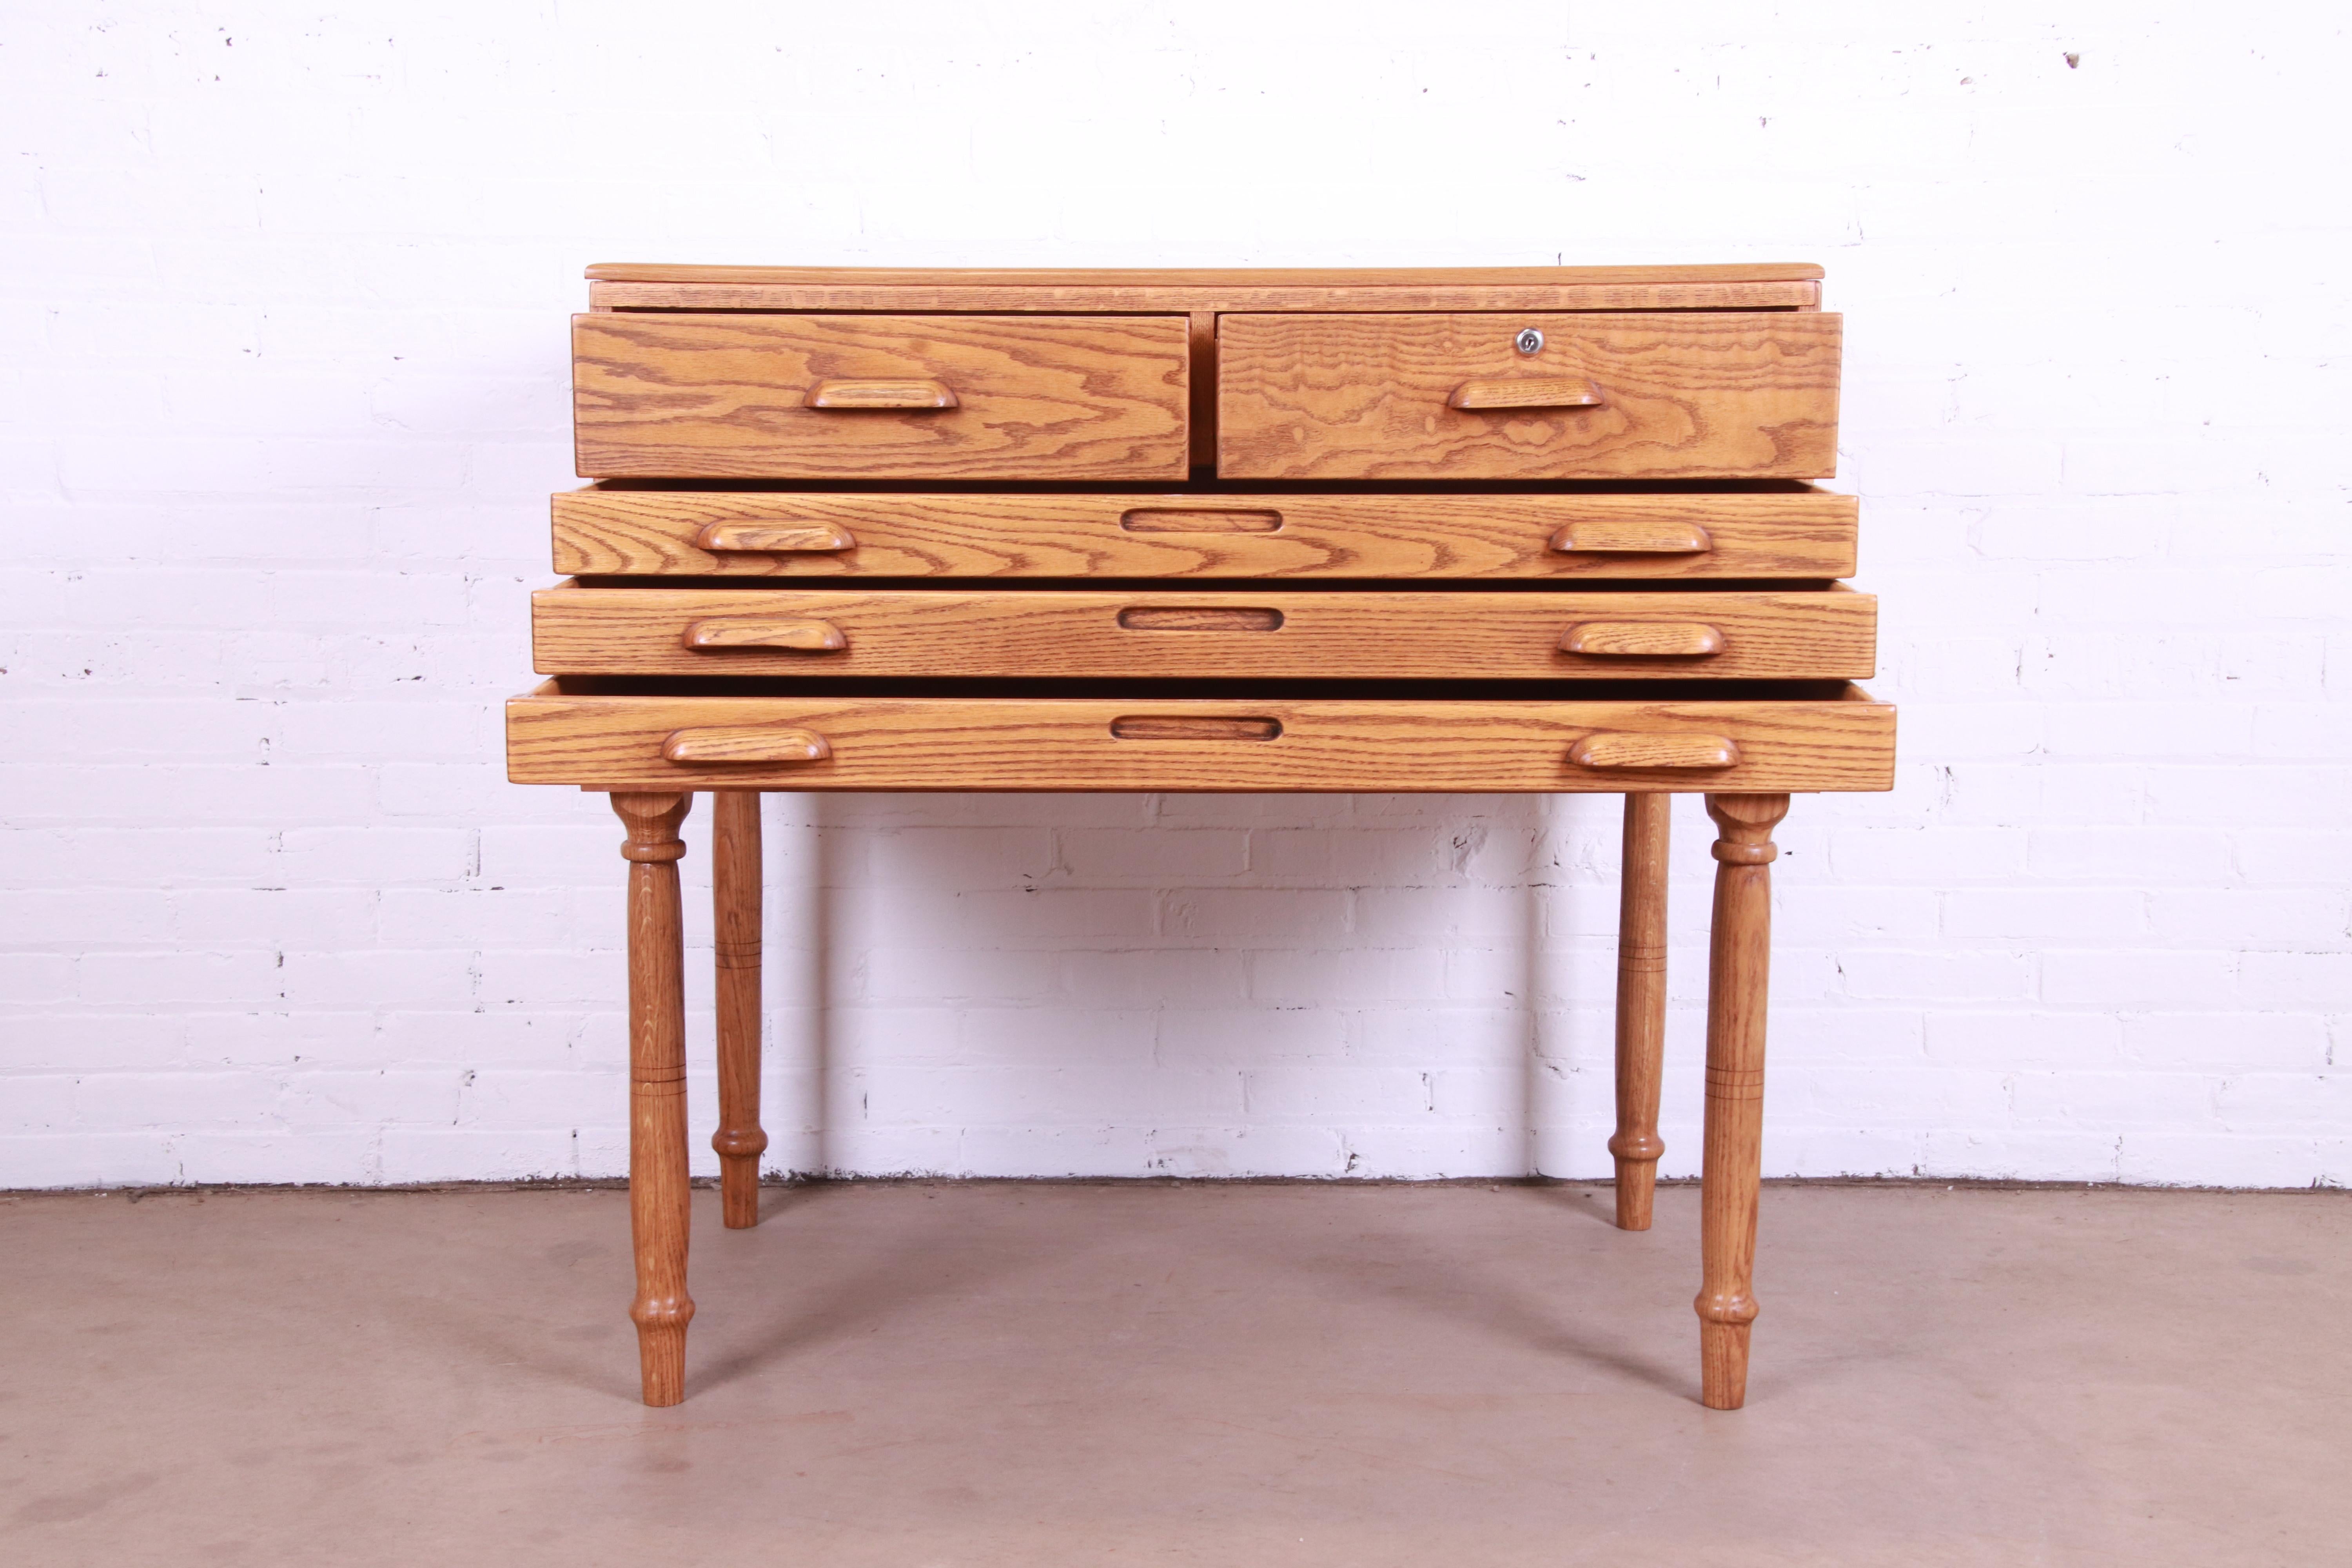 Vintage Arts & Crafts Oak Architect's Blueprint Flat File Cabinet 1